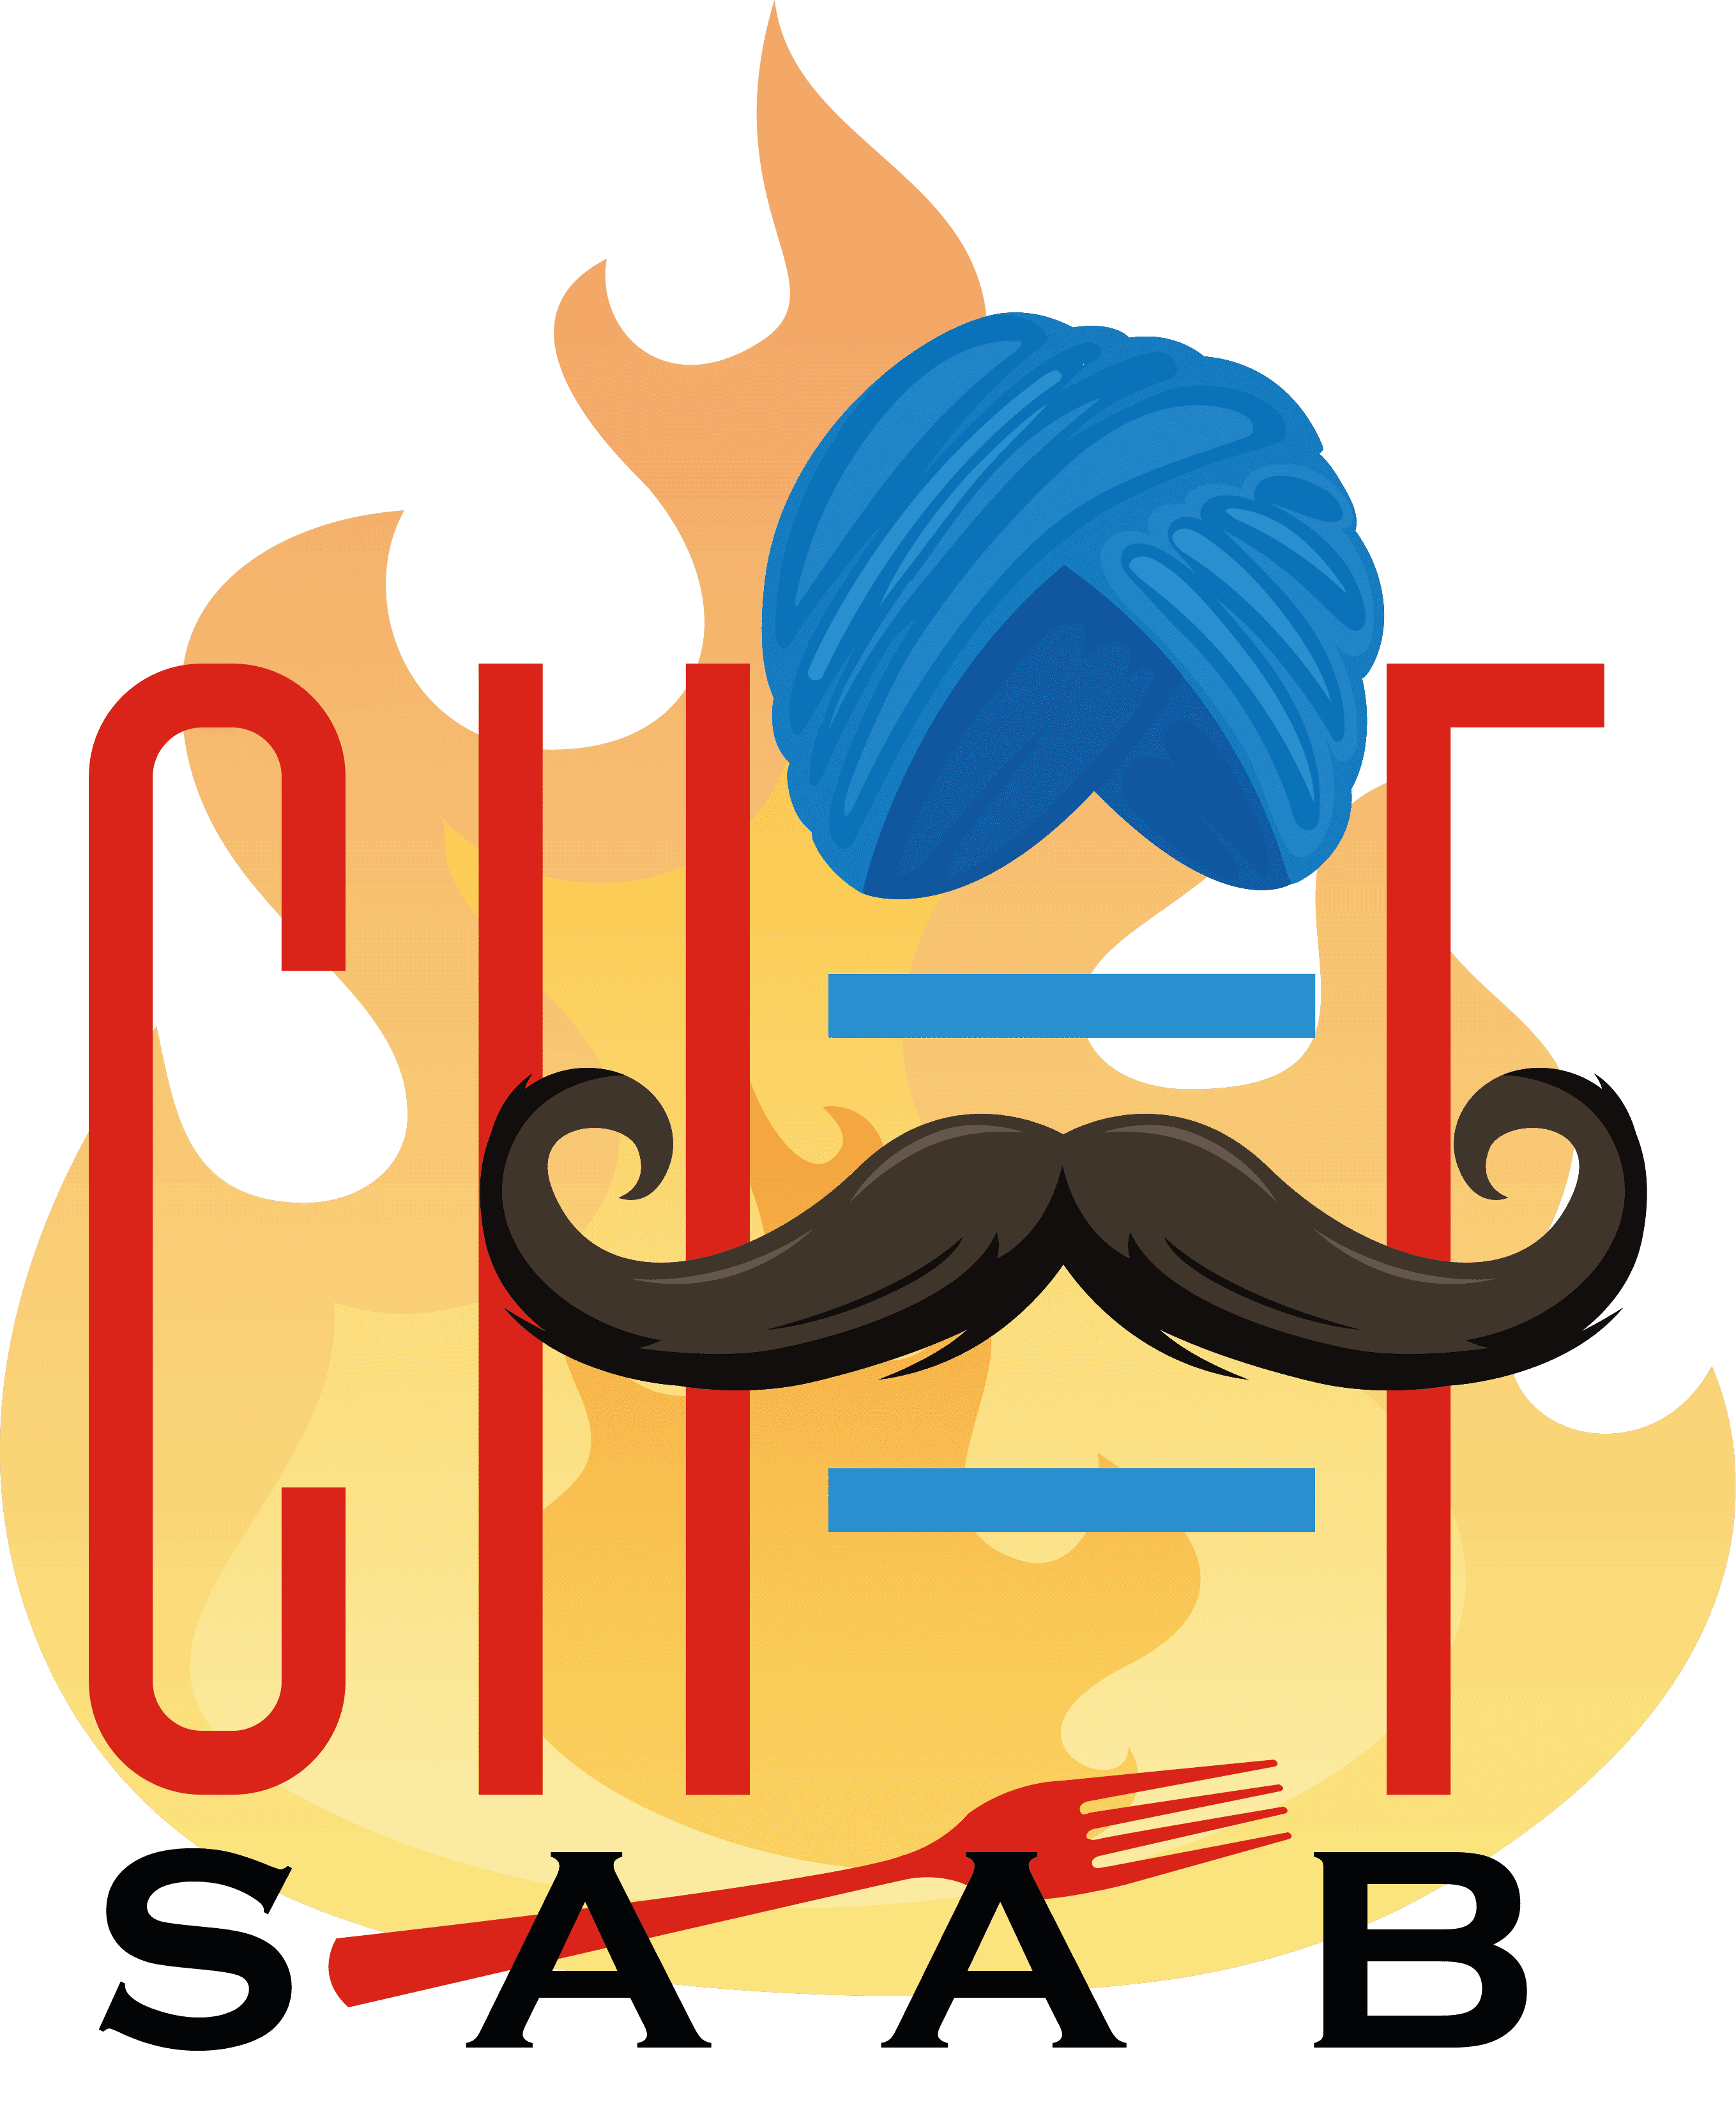 chefsaab logo-01